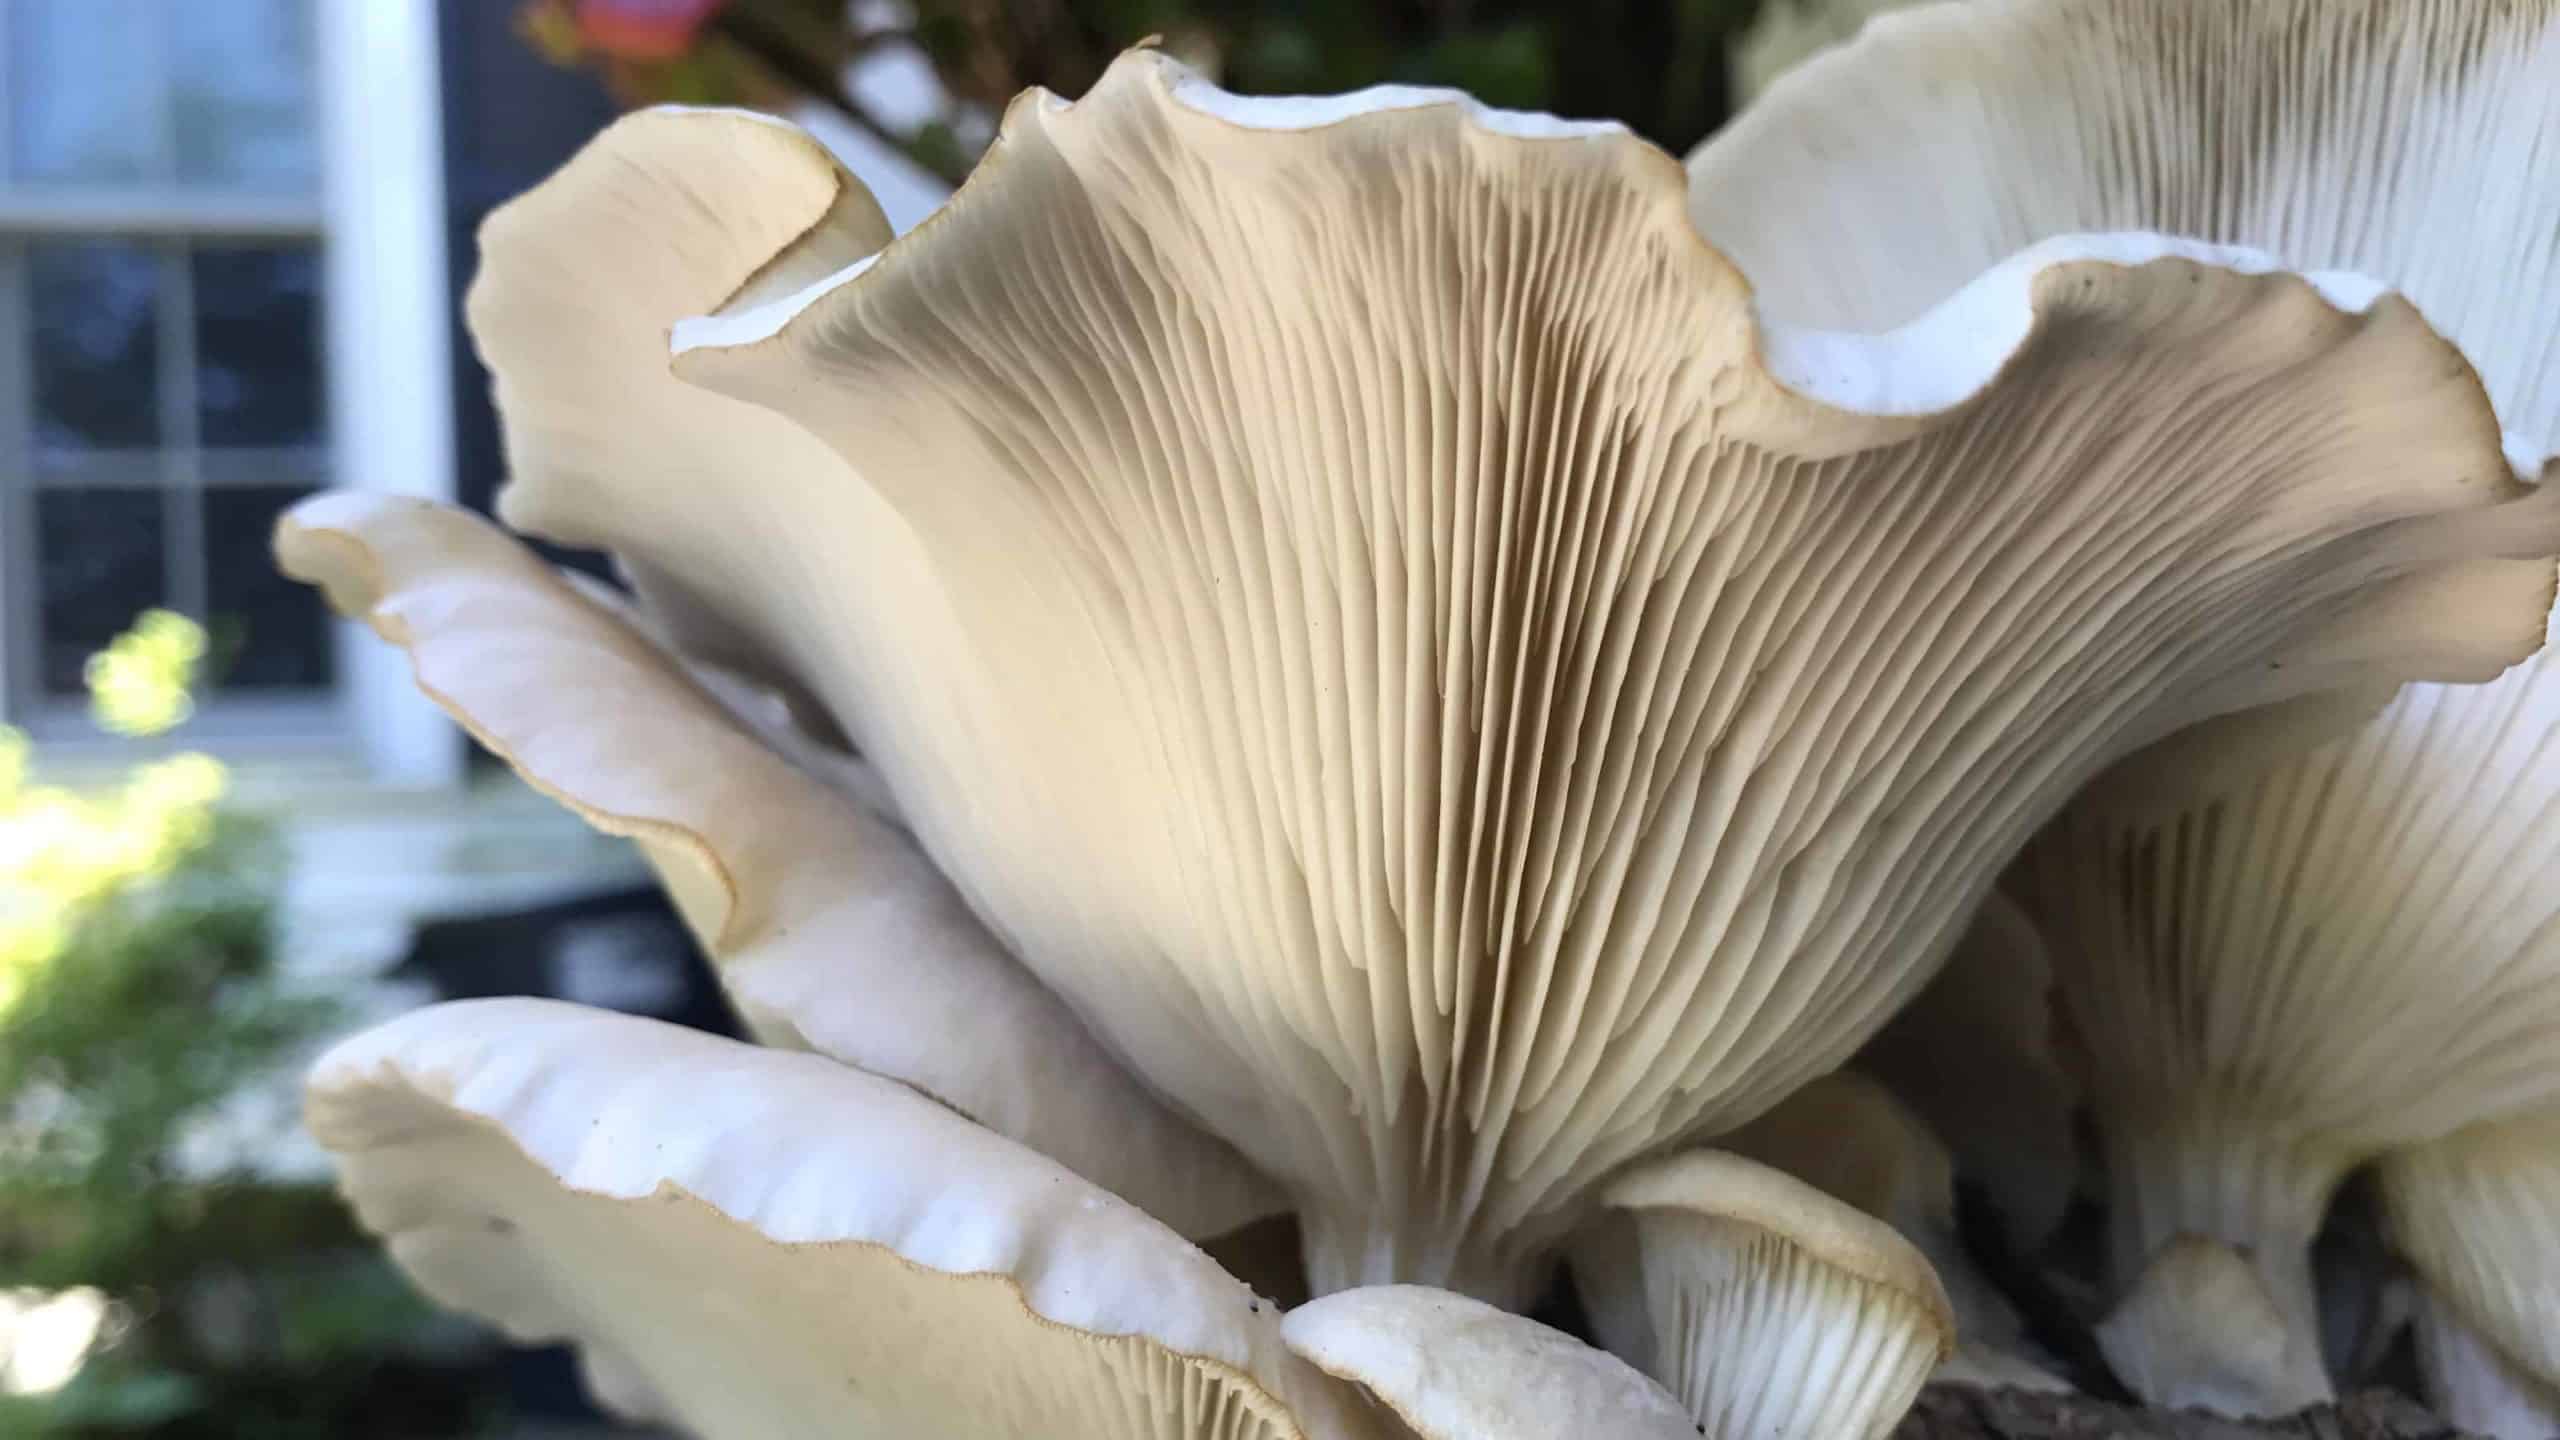 Oyster mushrooms grow naturally on a log at a New England farm.